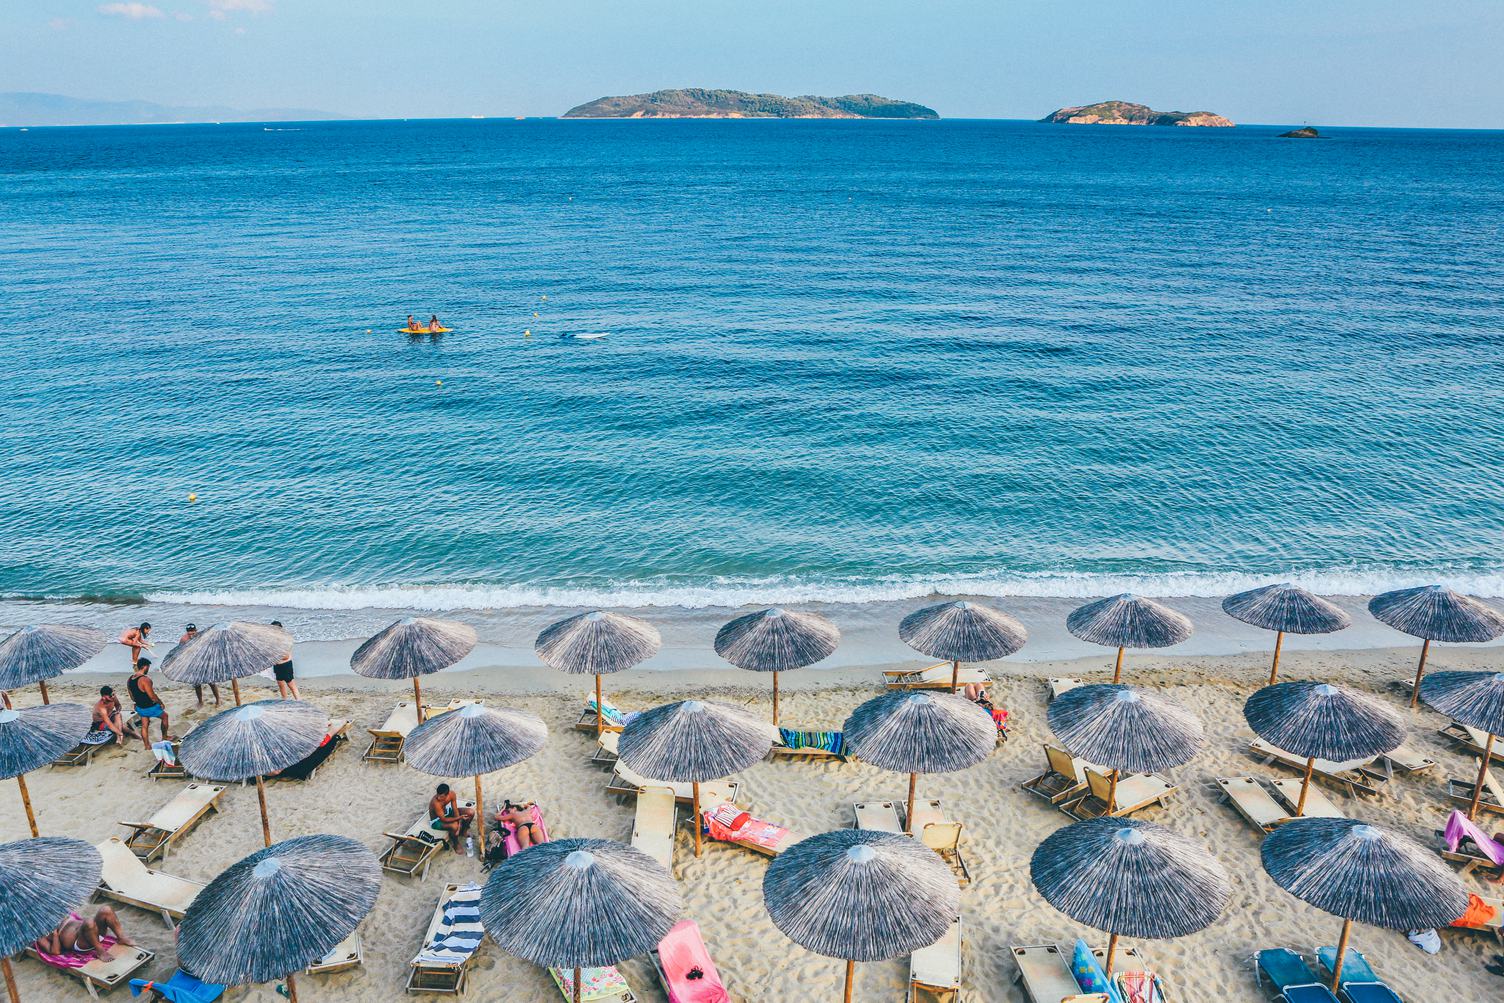 Beach Scene with Beautiful Turquoise Sea and Umbrellas